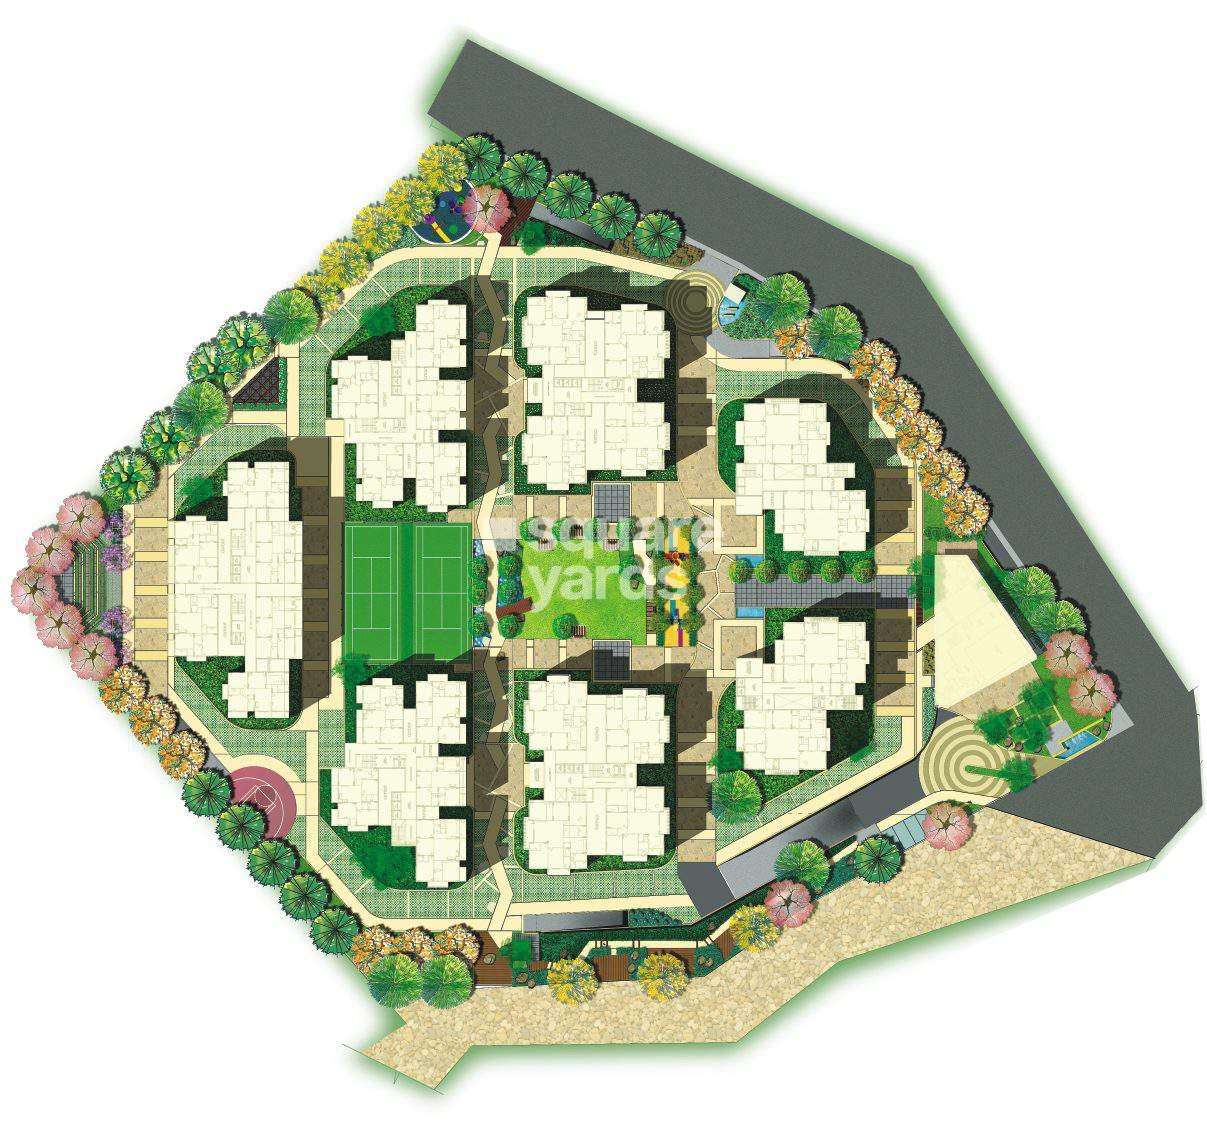 lansum etania project master plan image1